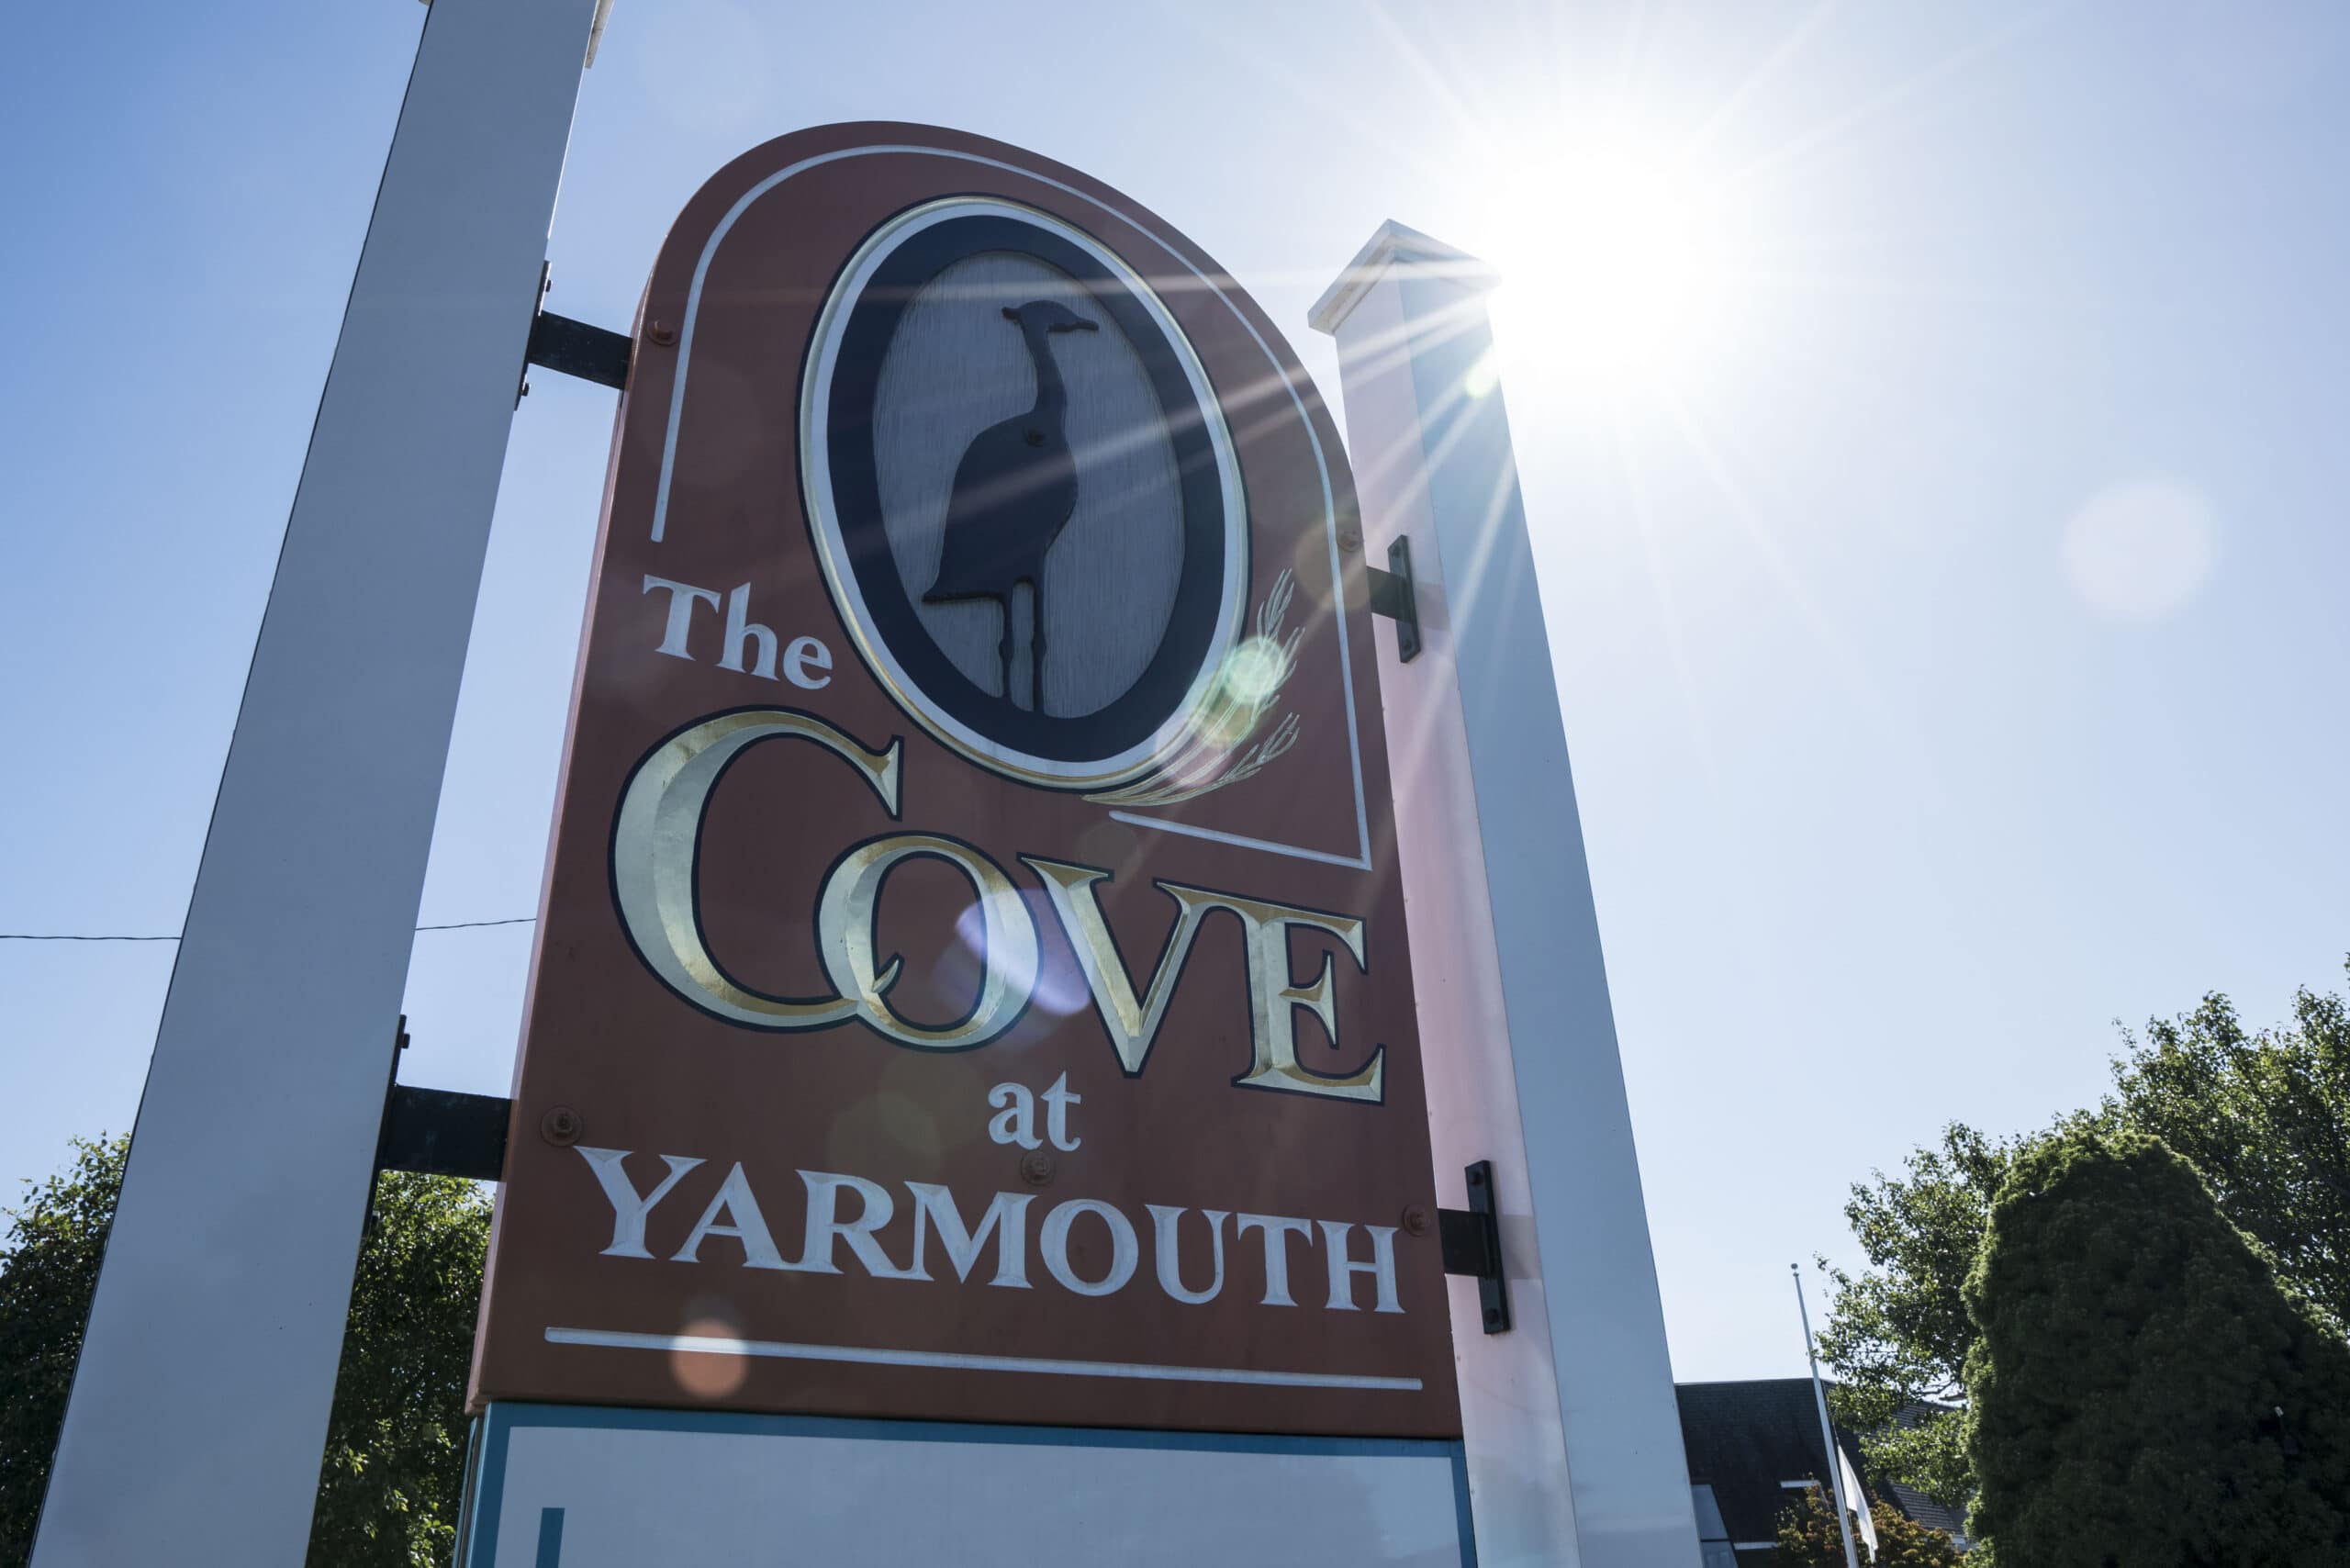 The Cove at Yarmouth